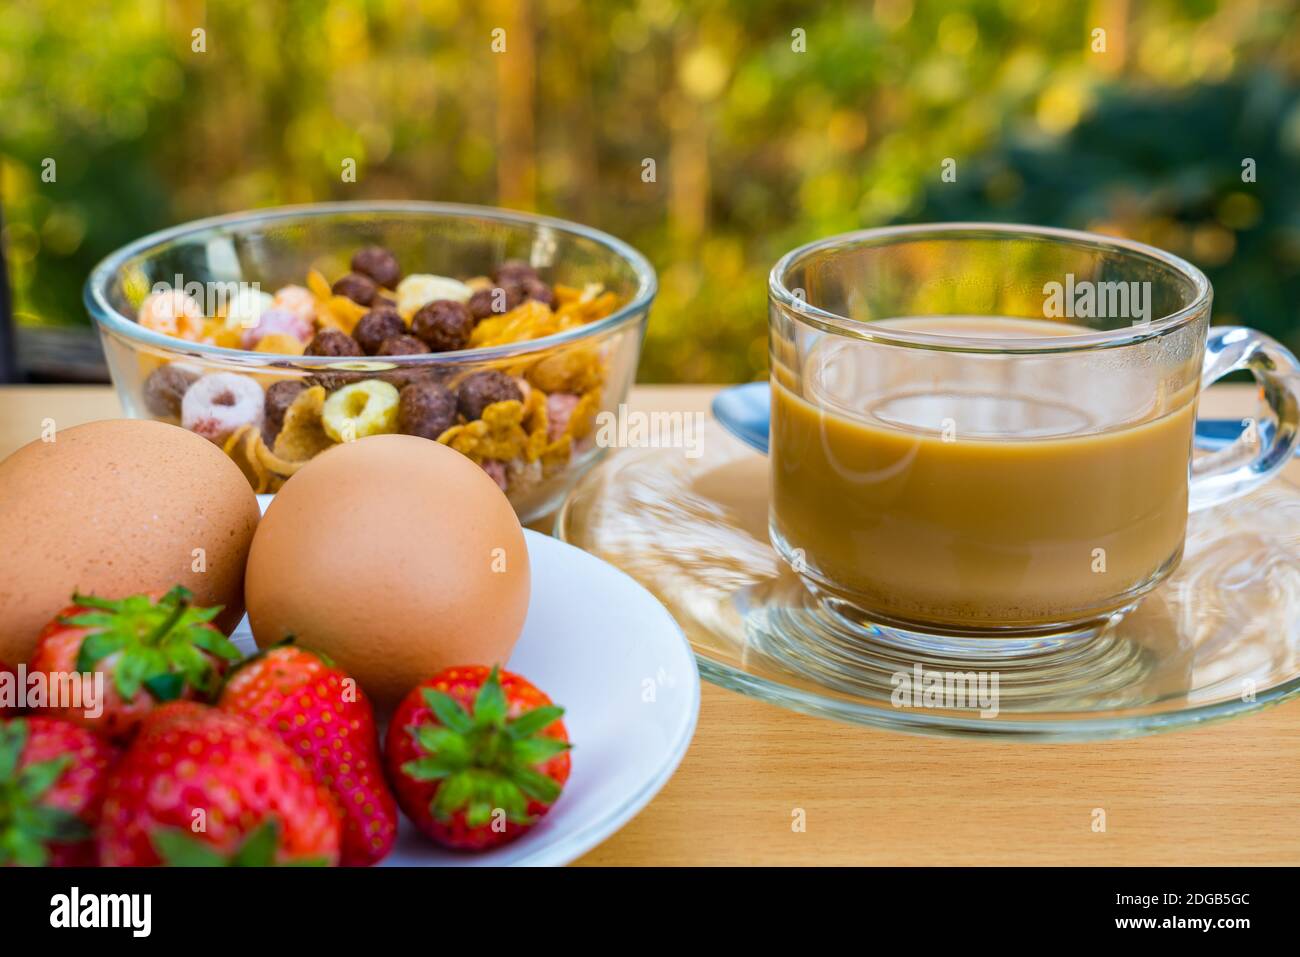 Hot coffee, cornflekes, boil eggs and ripe strawberry Stock Photo